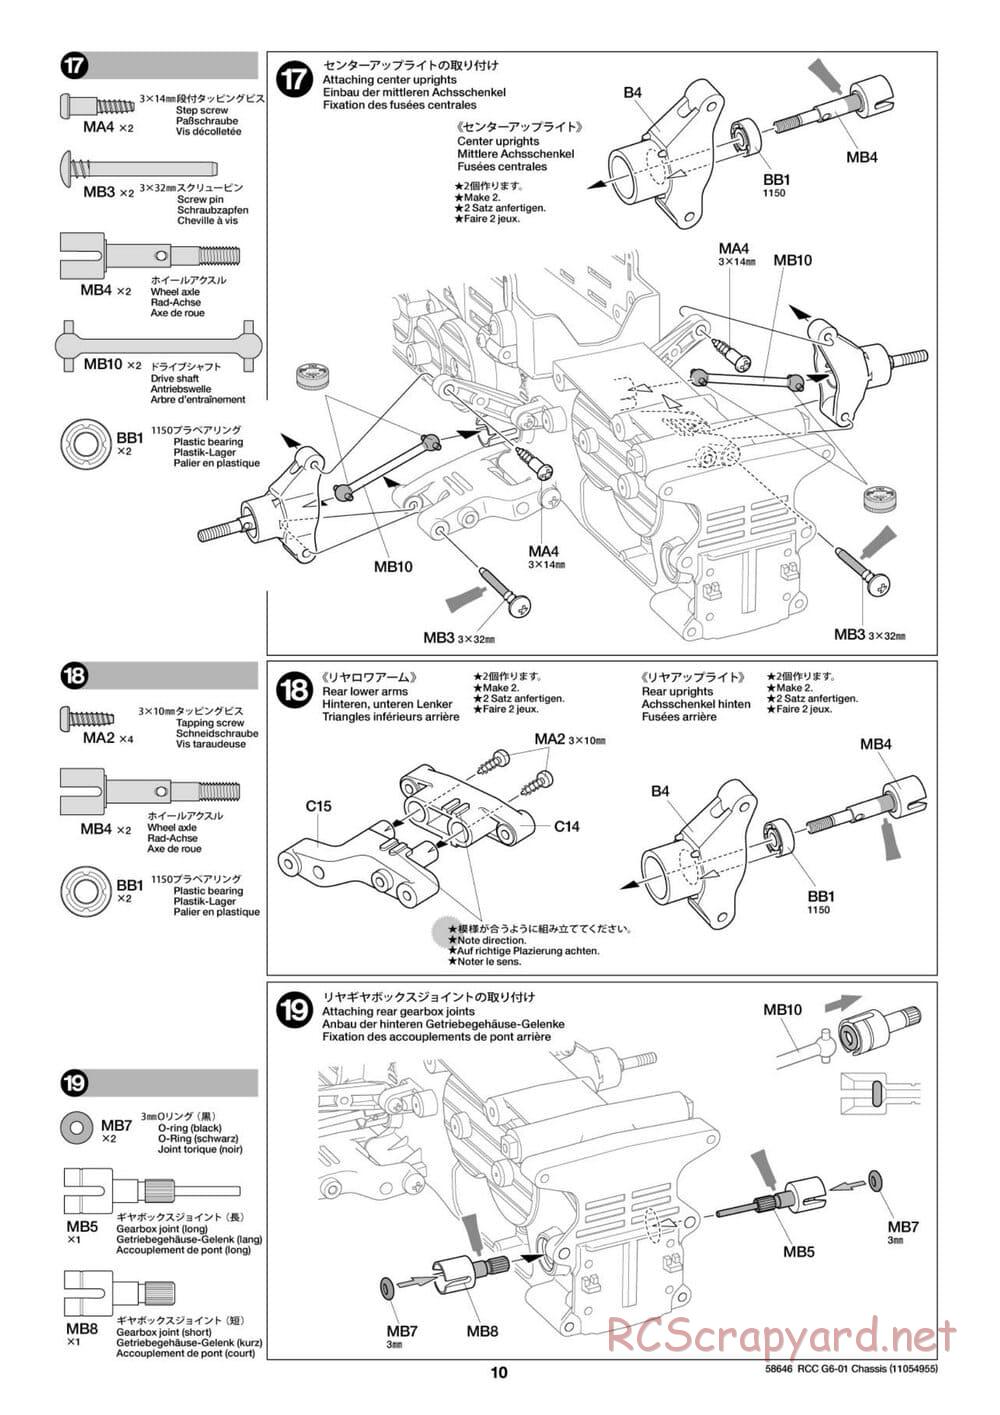 Tamiya - Konghead 6x6 - G6-01 Chassis - Manual - Page 10